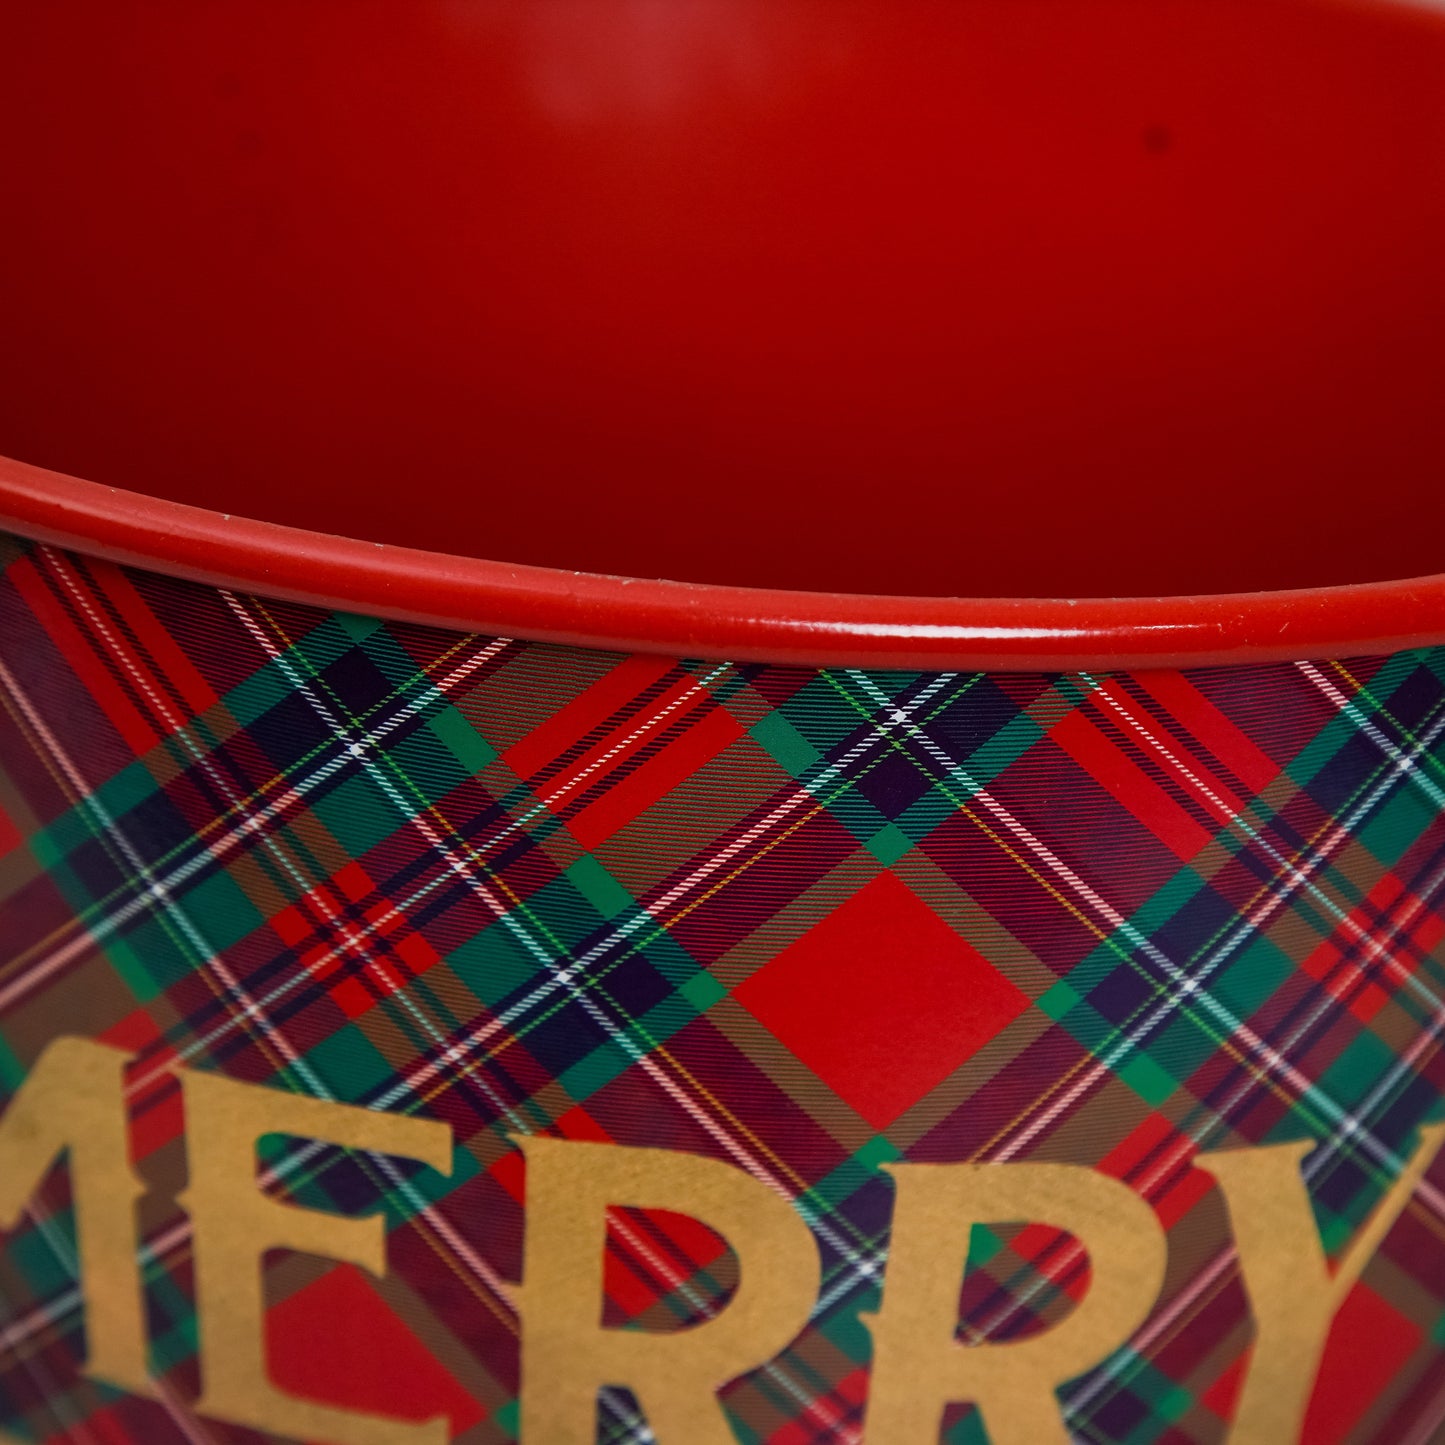 "Merry Christmas" Plaid Metal Bucket